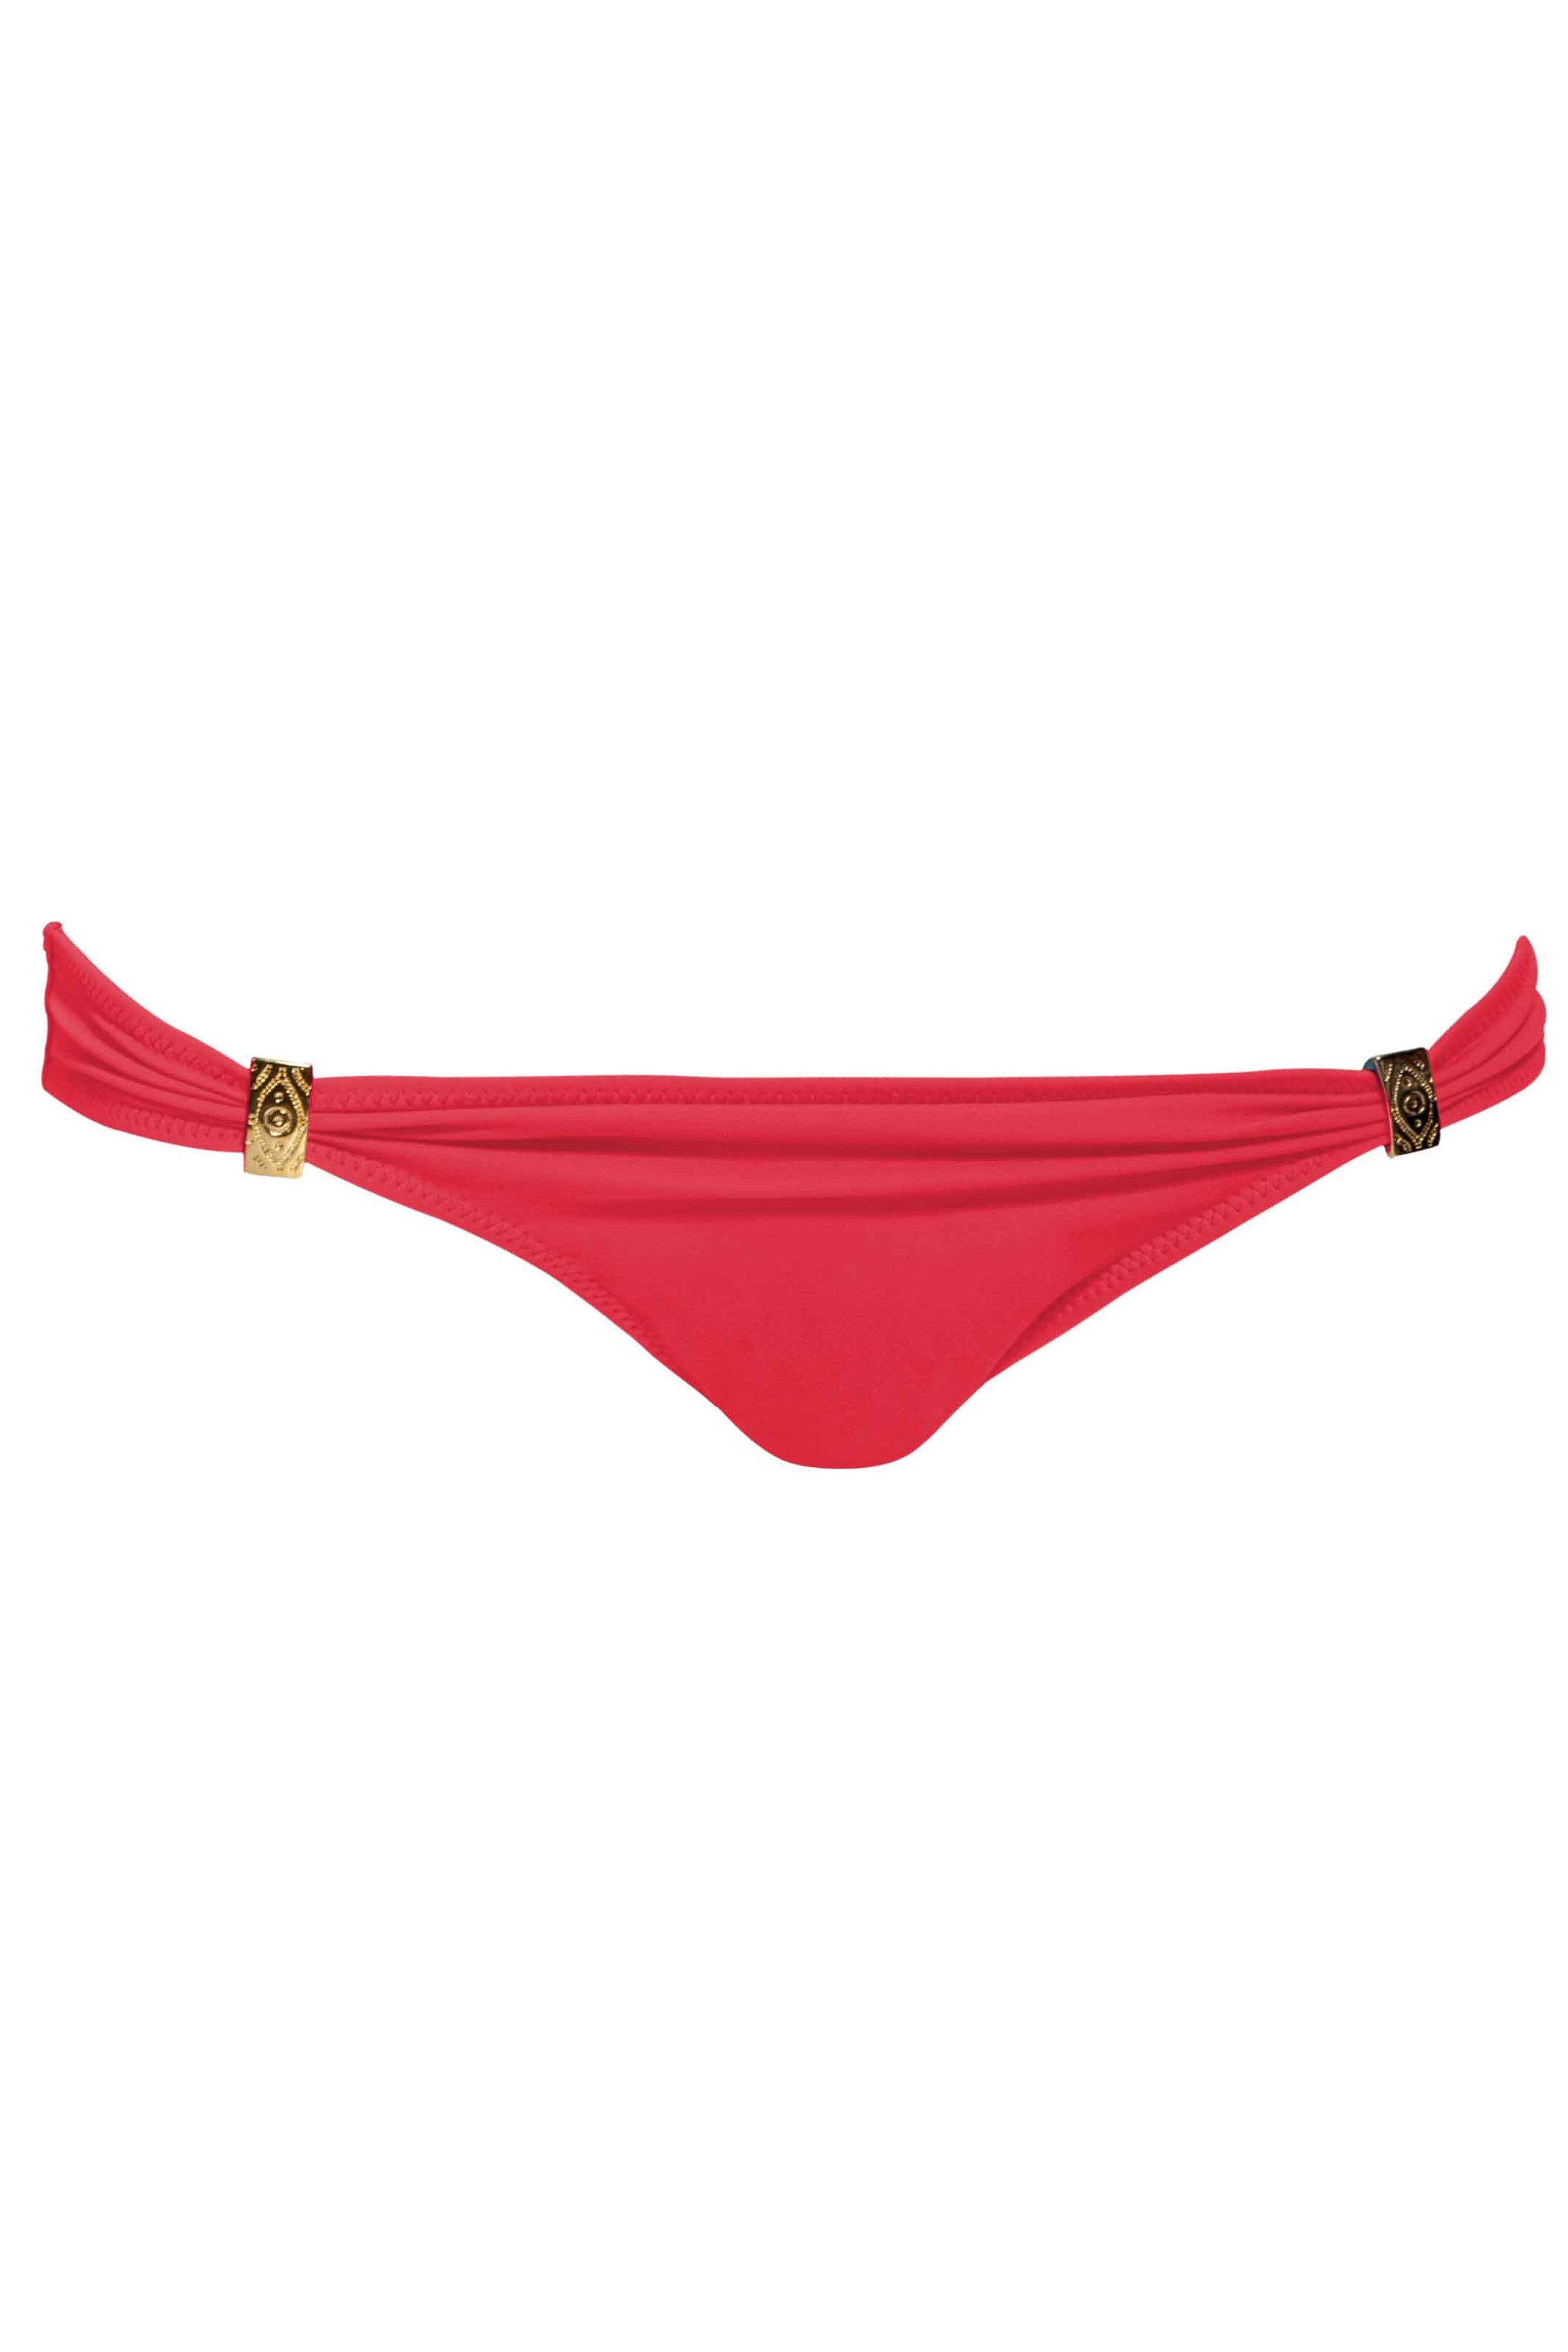 Phax Rode intermedium bikini broekje